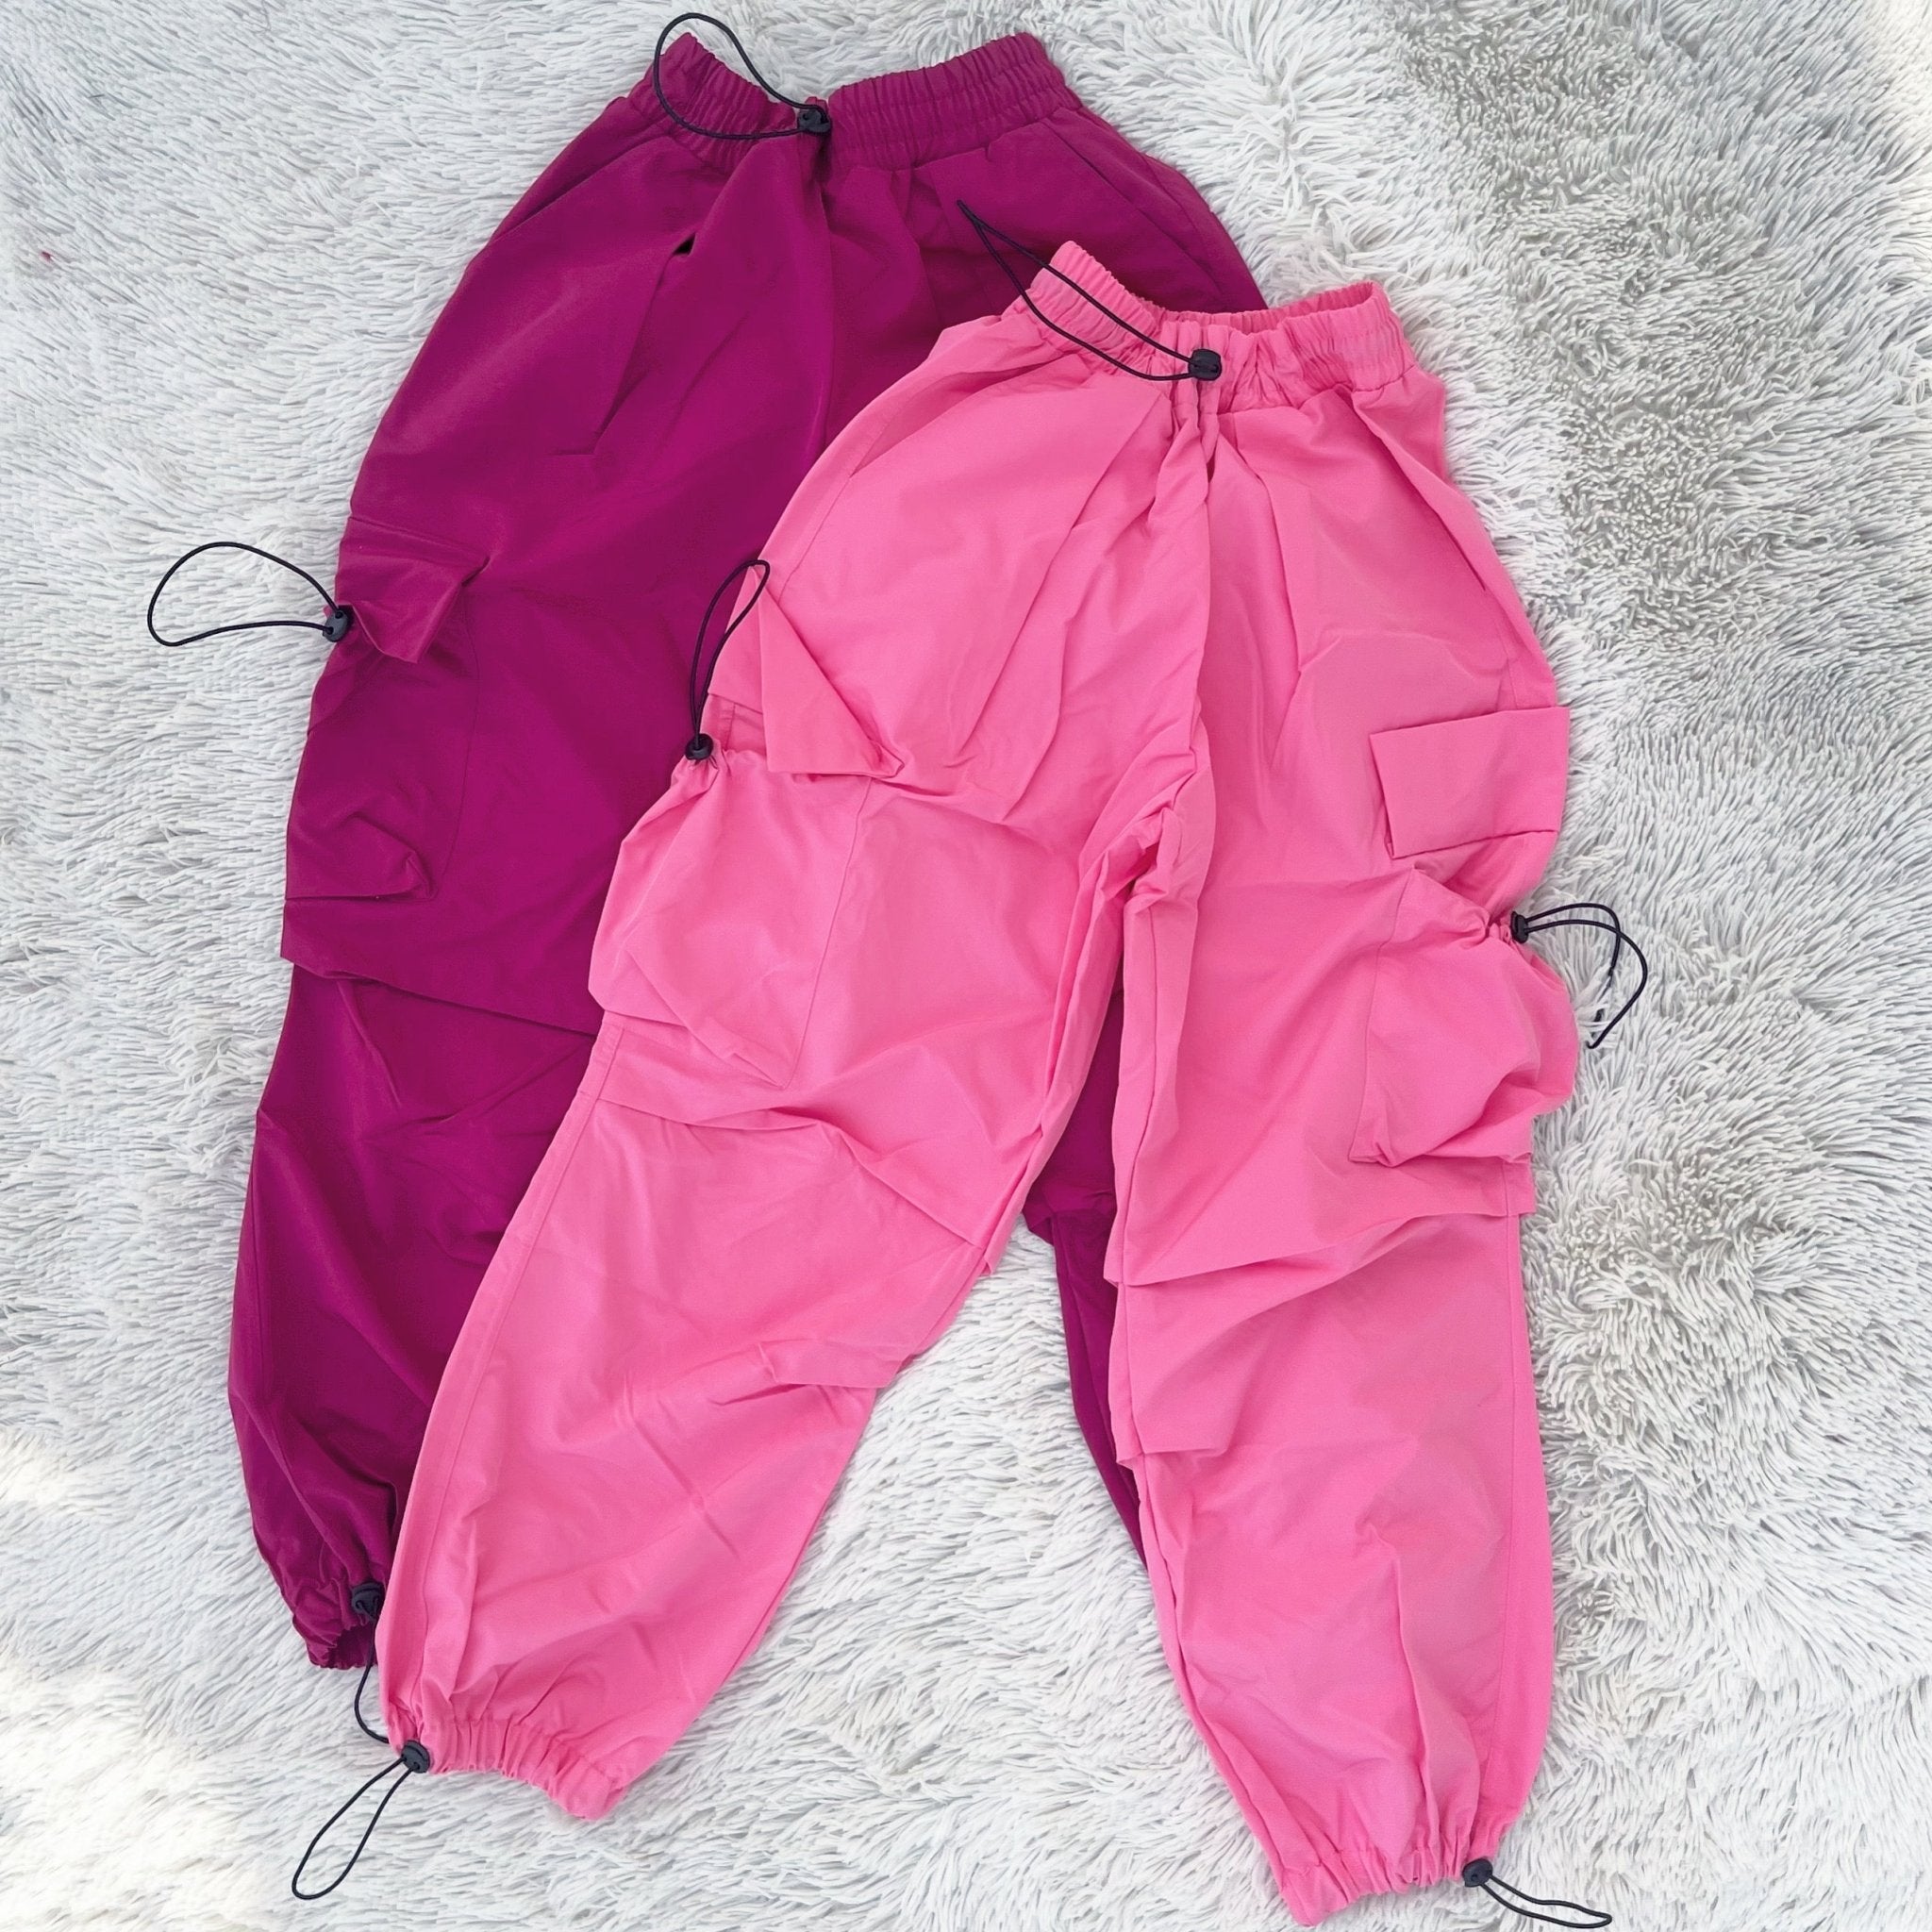 Parachute Pants - Light pink - Ladies